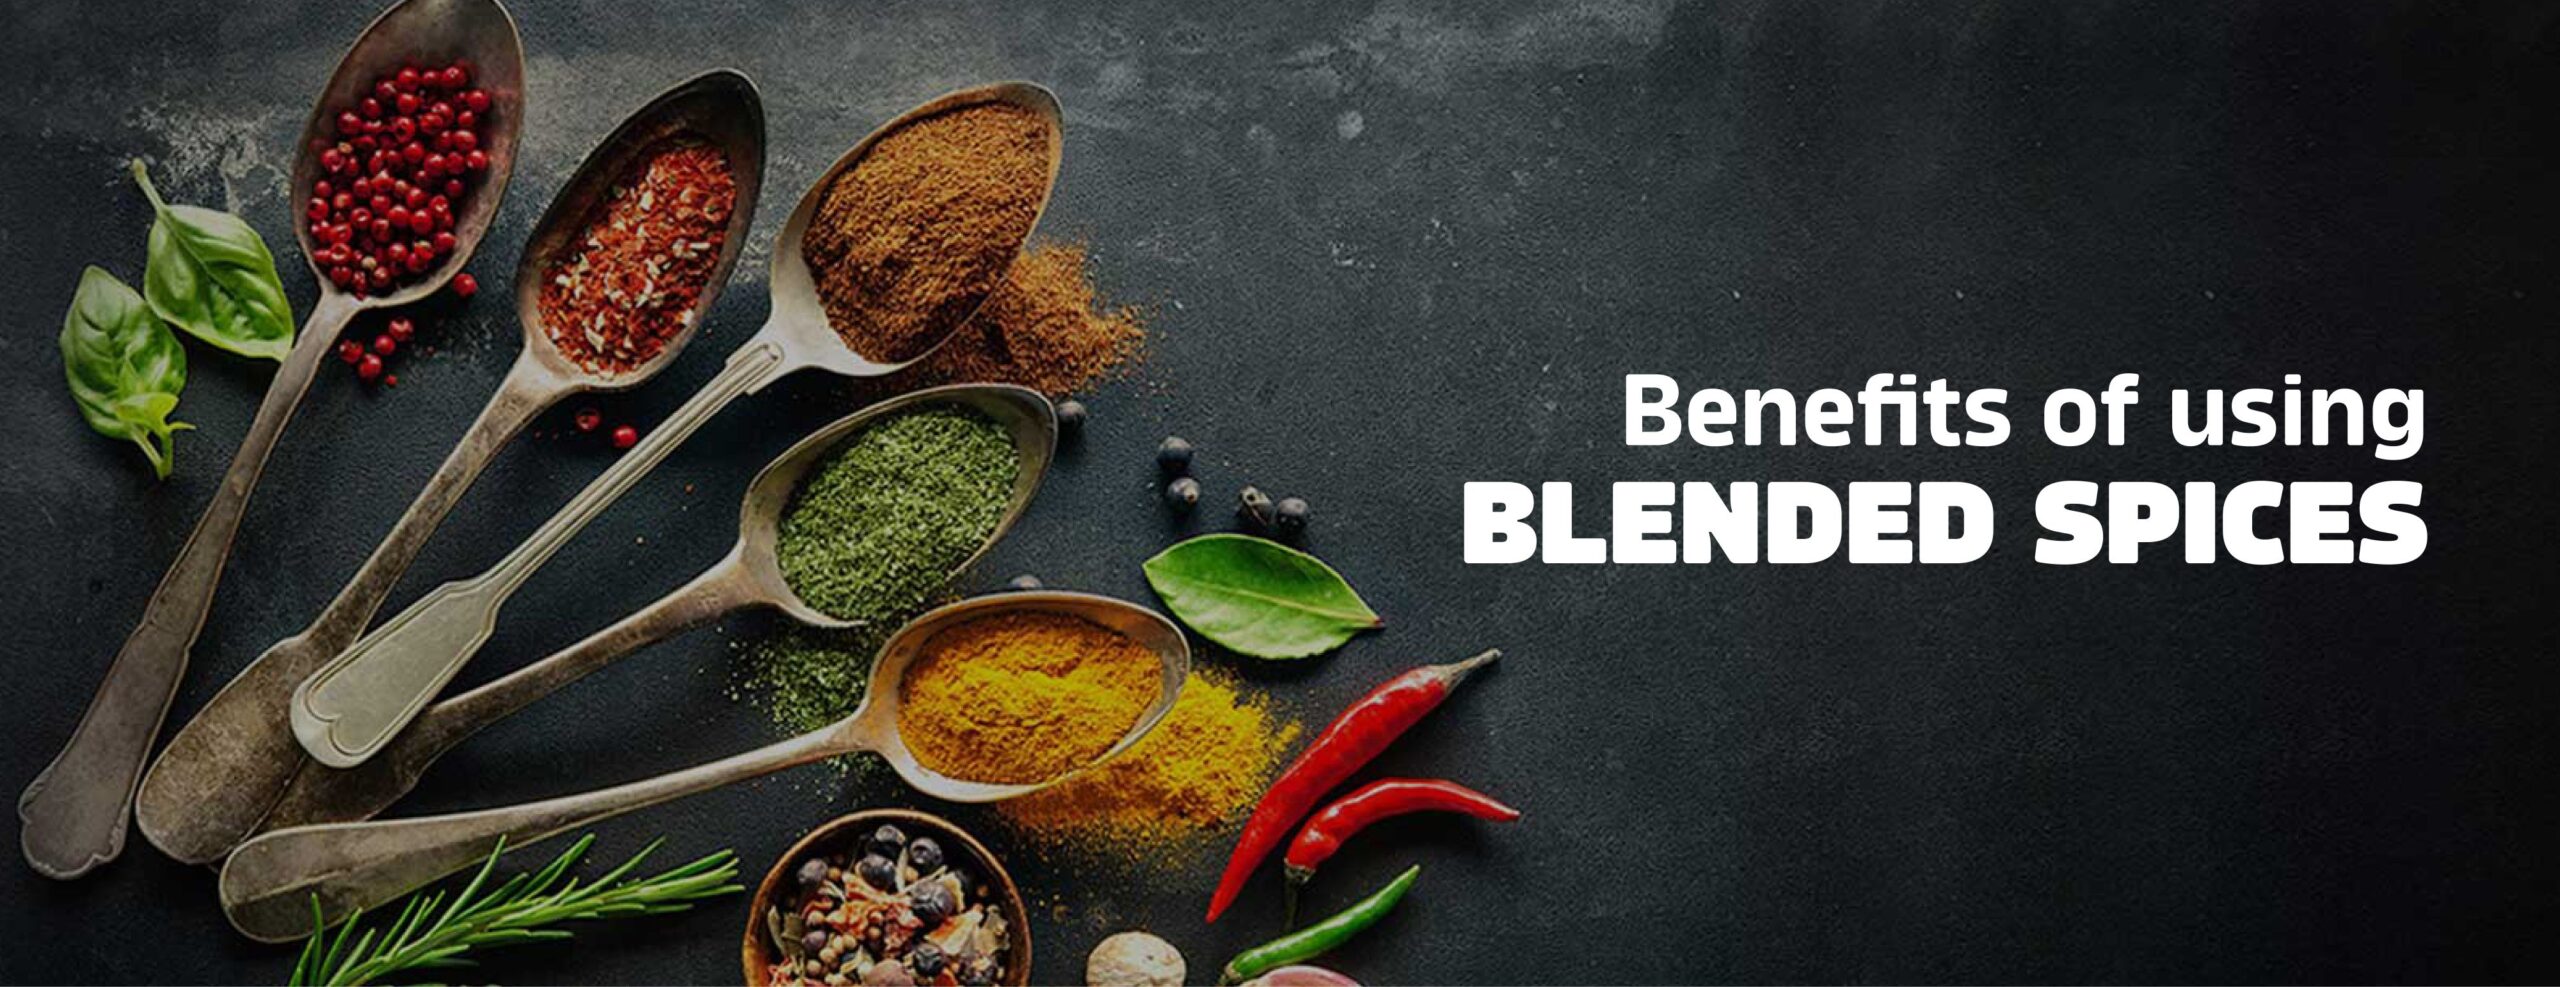 Garam Masala, The Spice Blend With 7 Health Benefits!